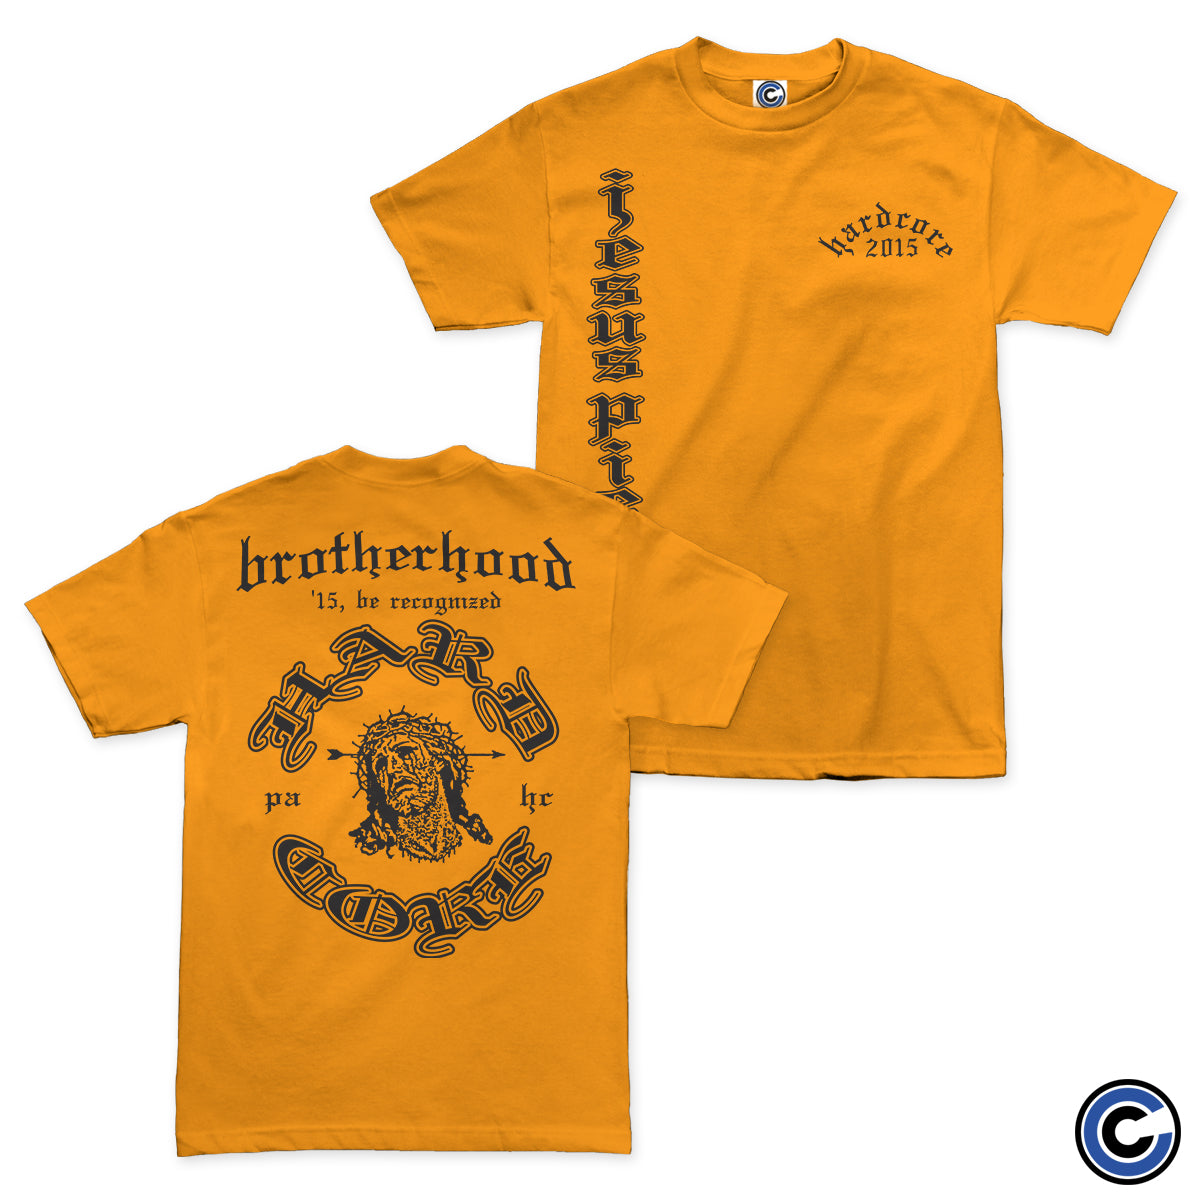 Jesus Piece "Brotherhood" Shirt